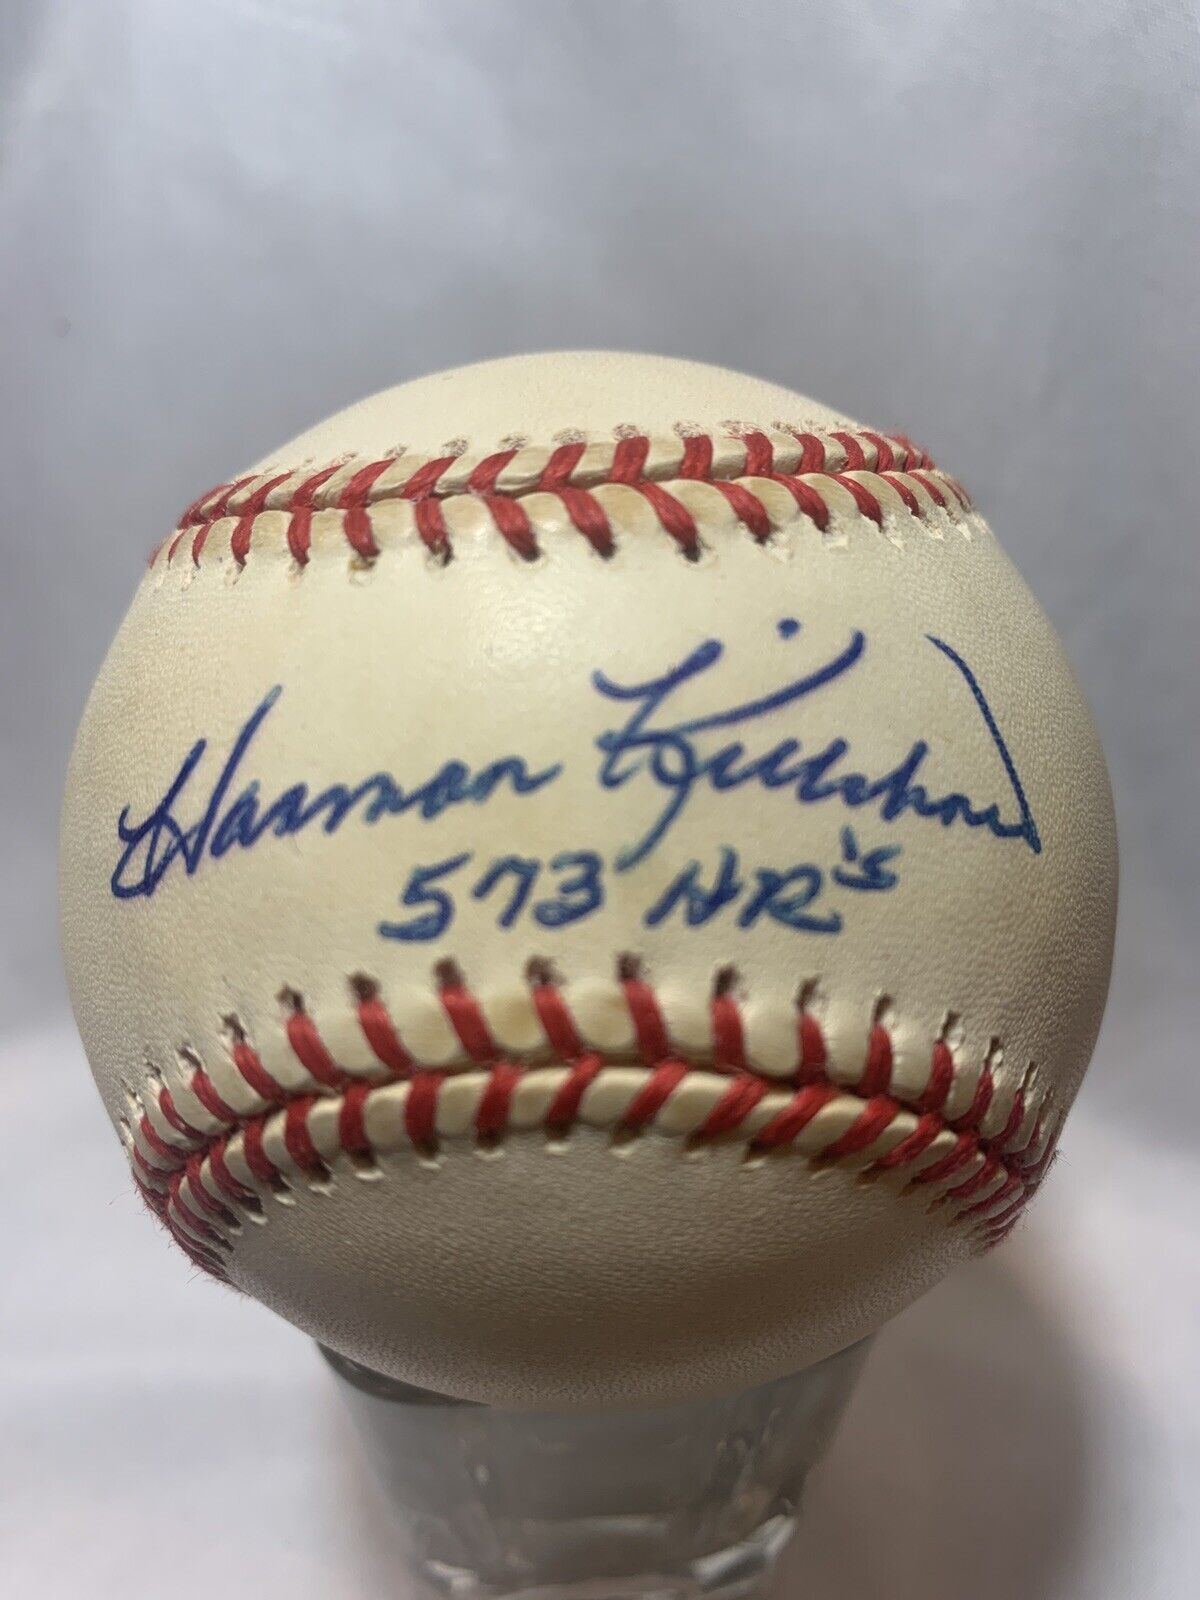 Harmon Killebrew 573 HR’s Minnesota Twins Baseball Autographed with COA